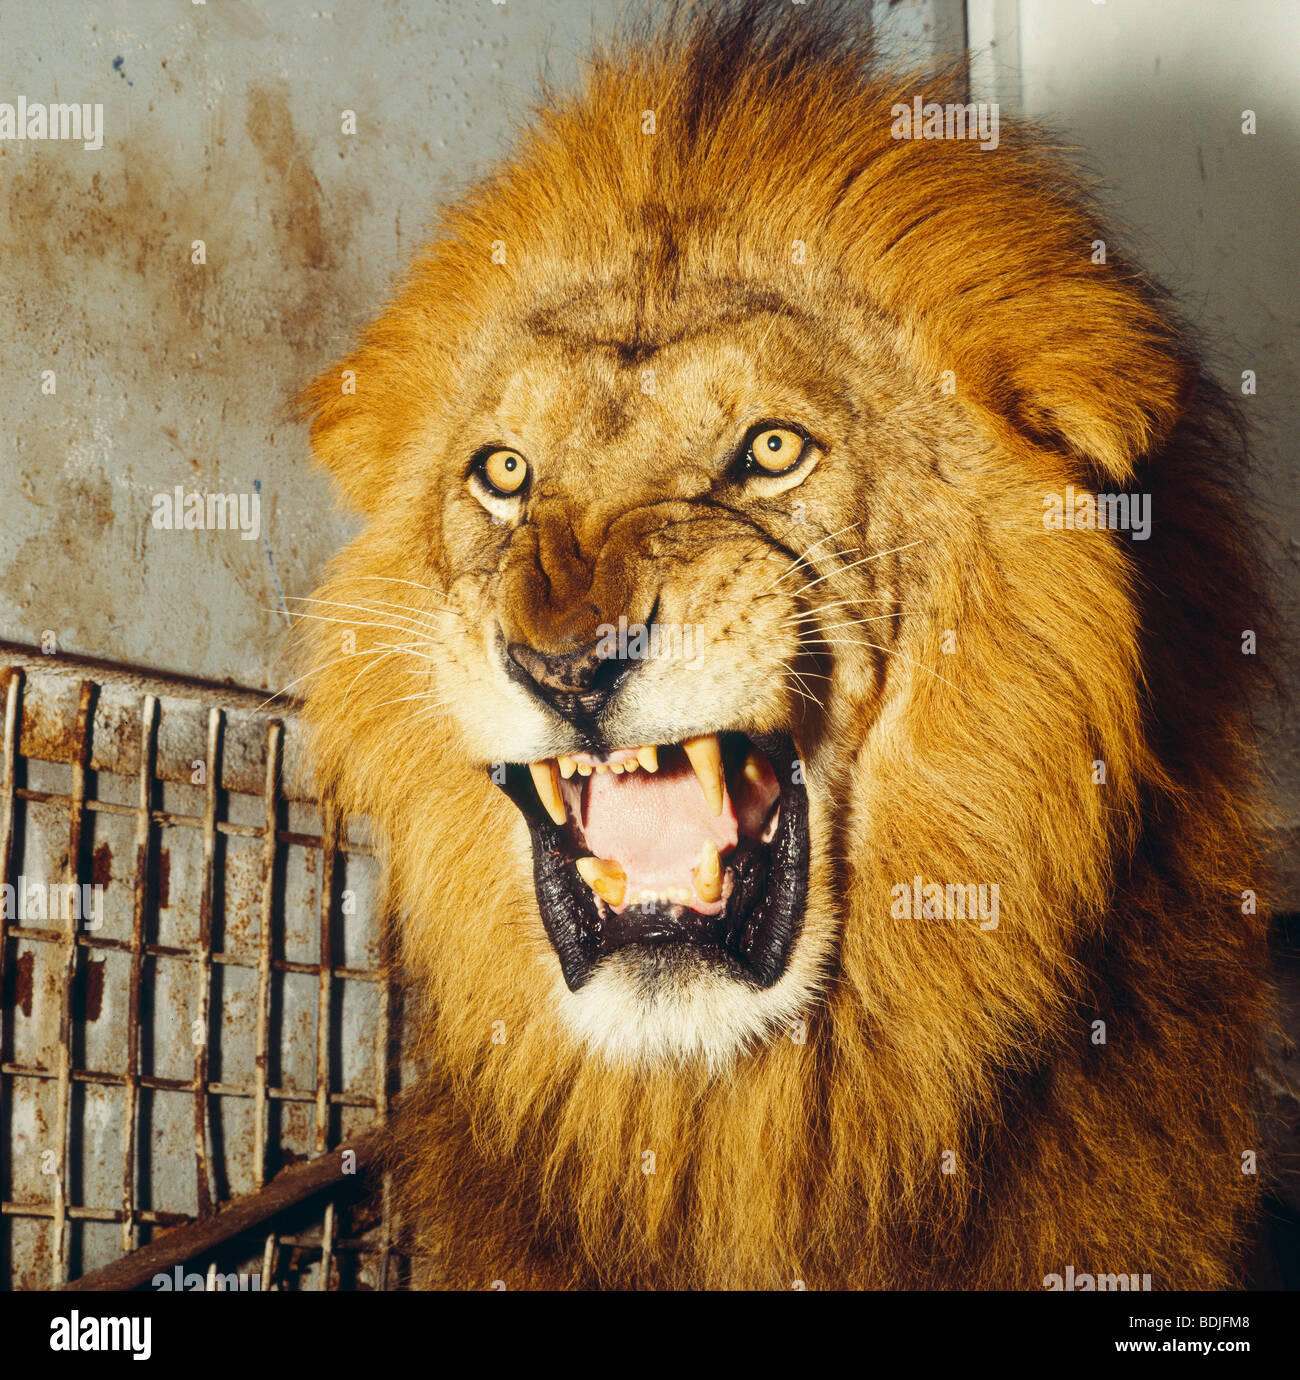 Lion Roars Stock Illustrations – 116 Lion Roars Stock